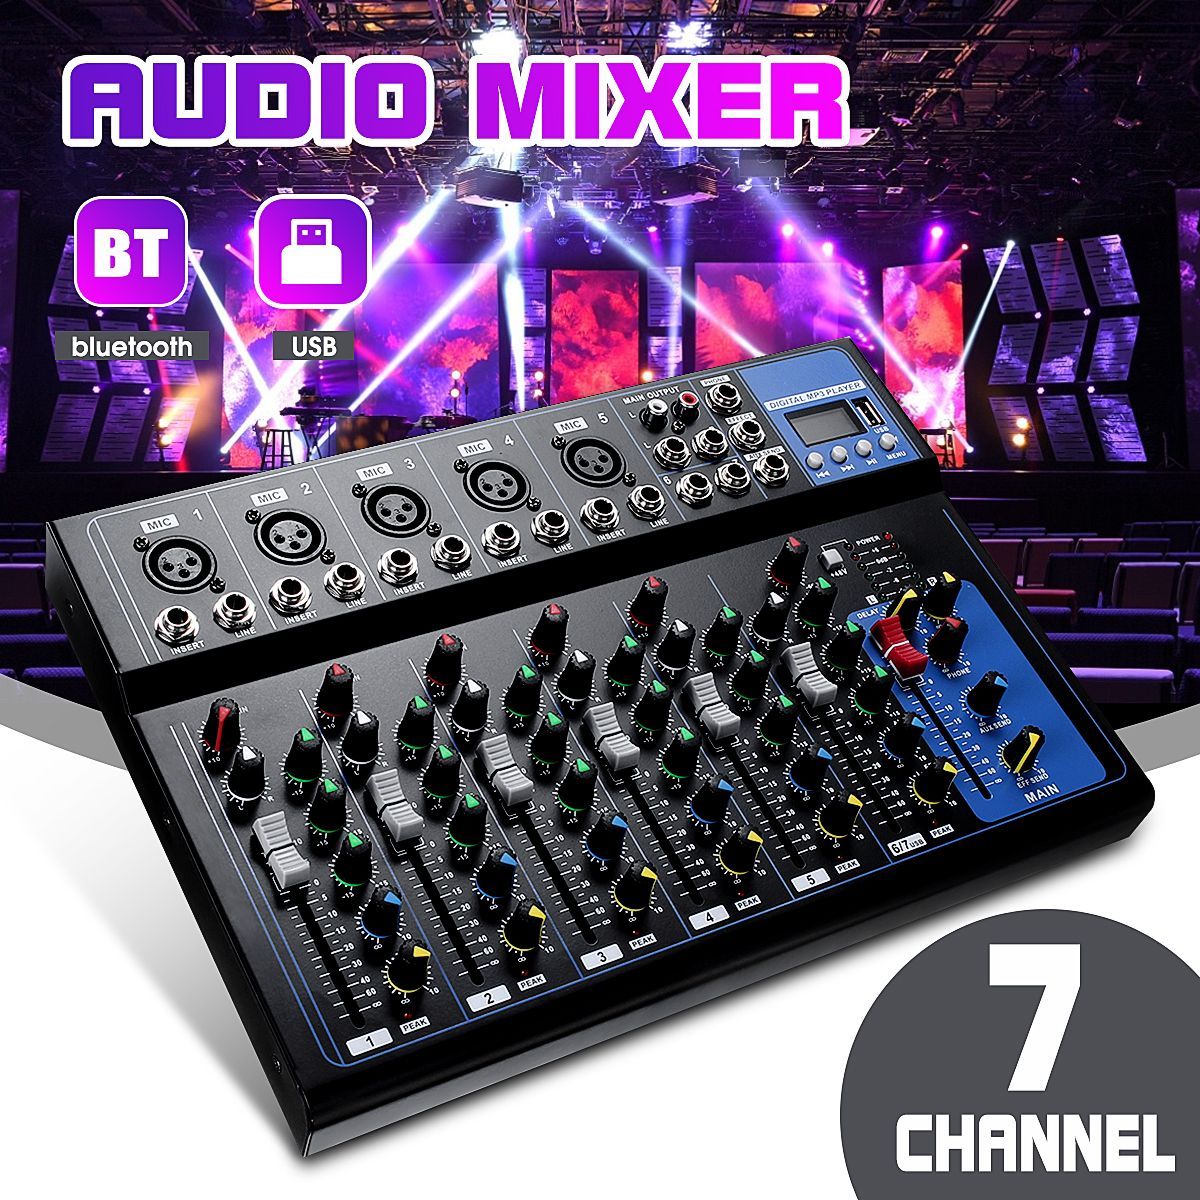 7-Channel-Digital-Microphone-Sound-Audio-Mixer-Console-48V-Phantom-Power-Professional-Karaoke-Audio--1586328